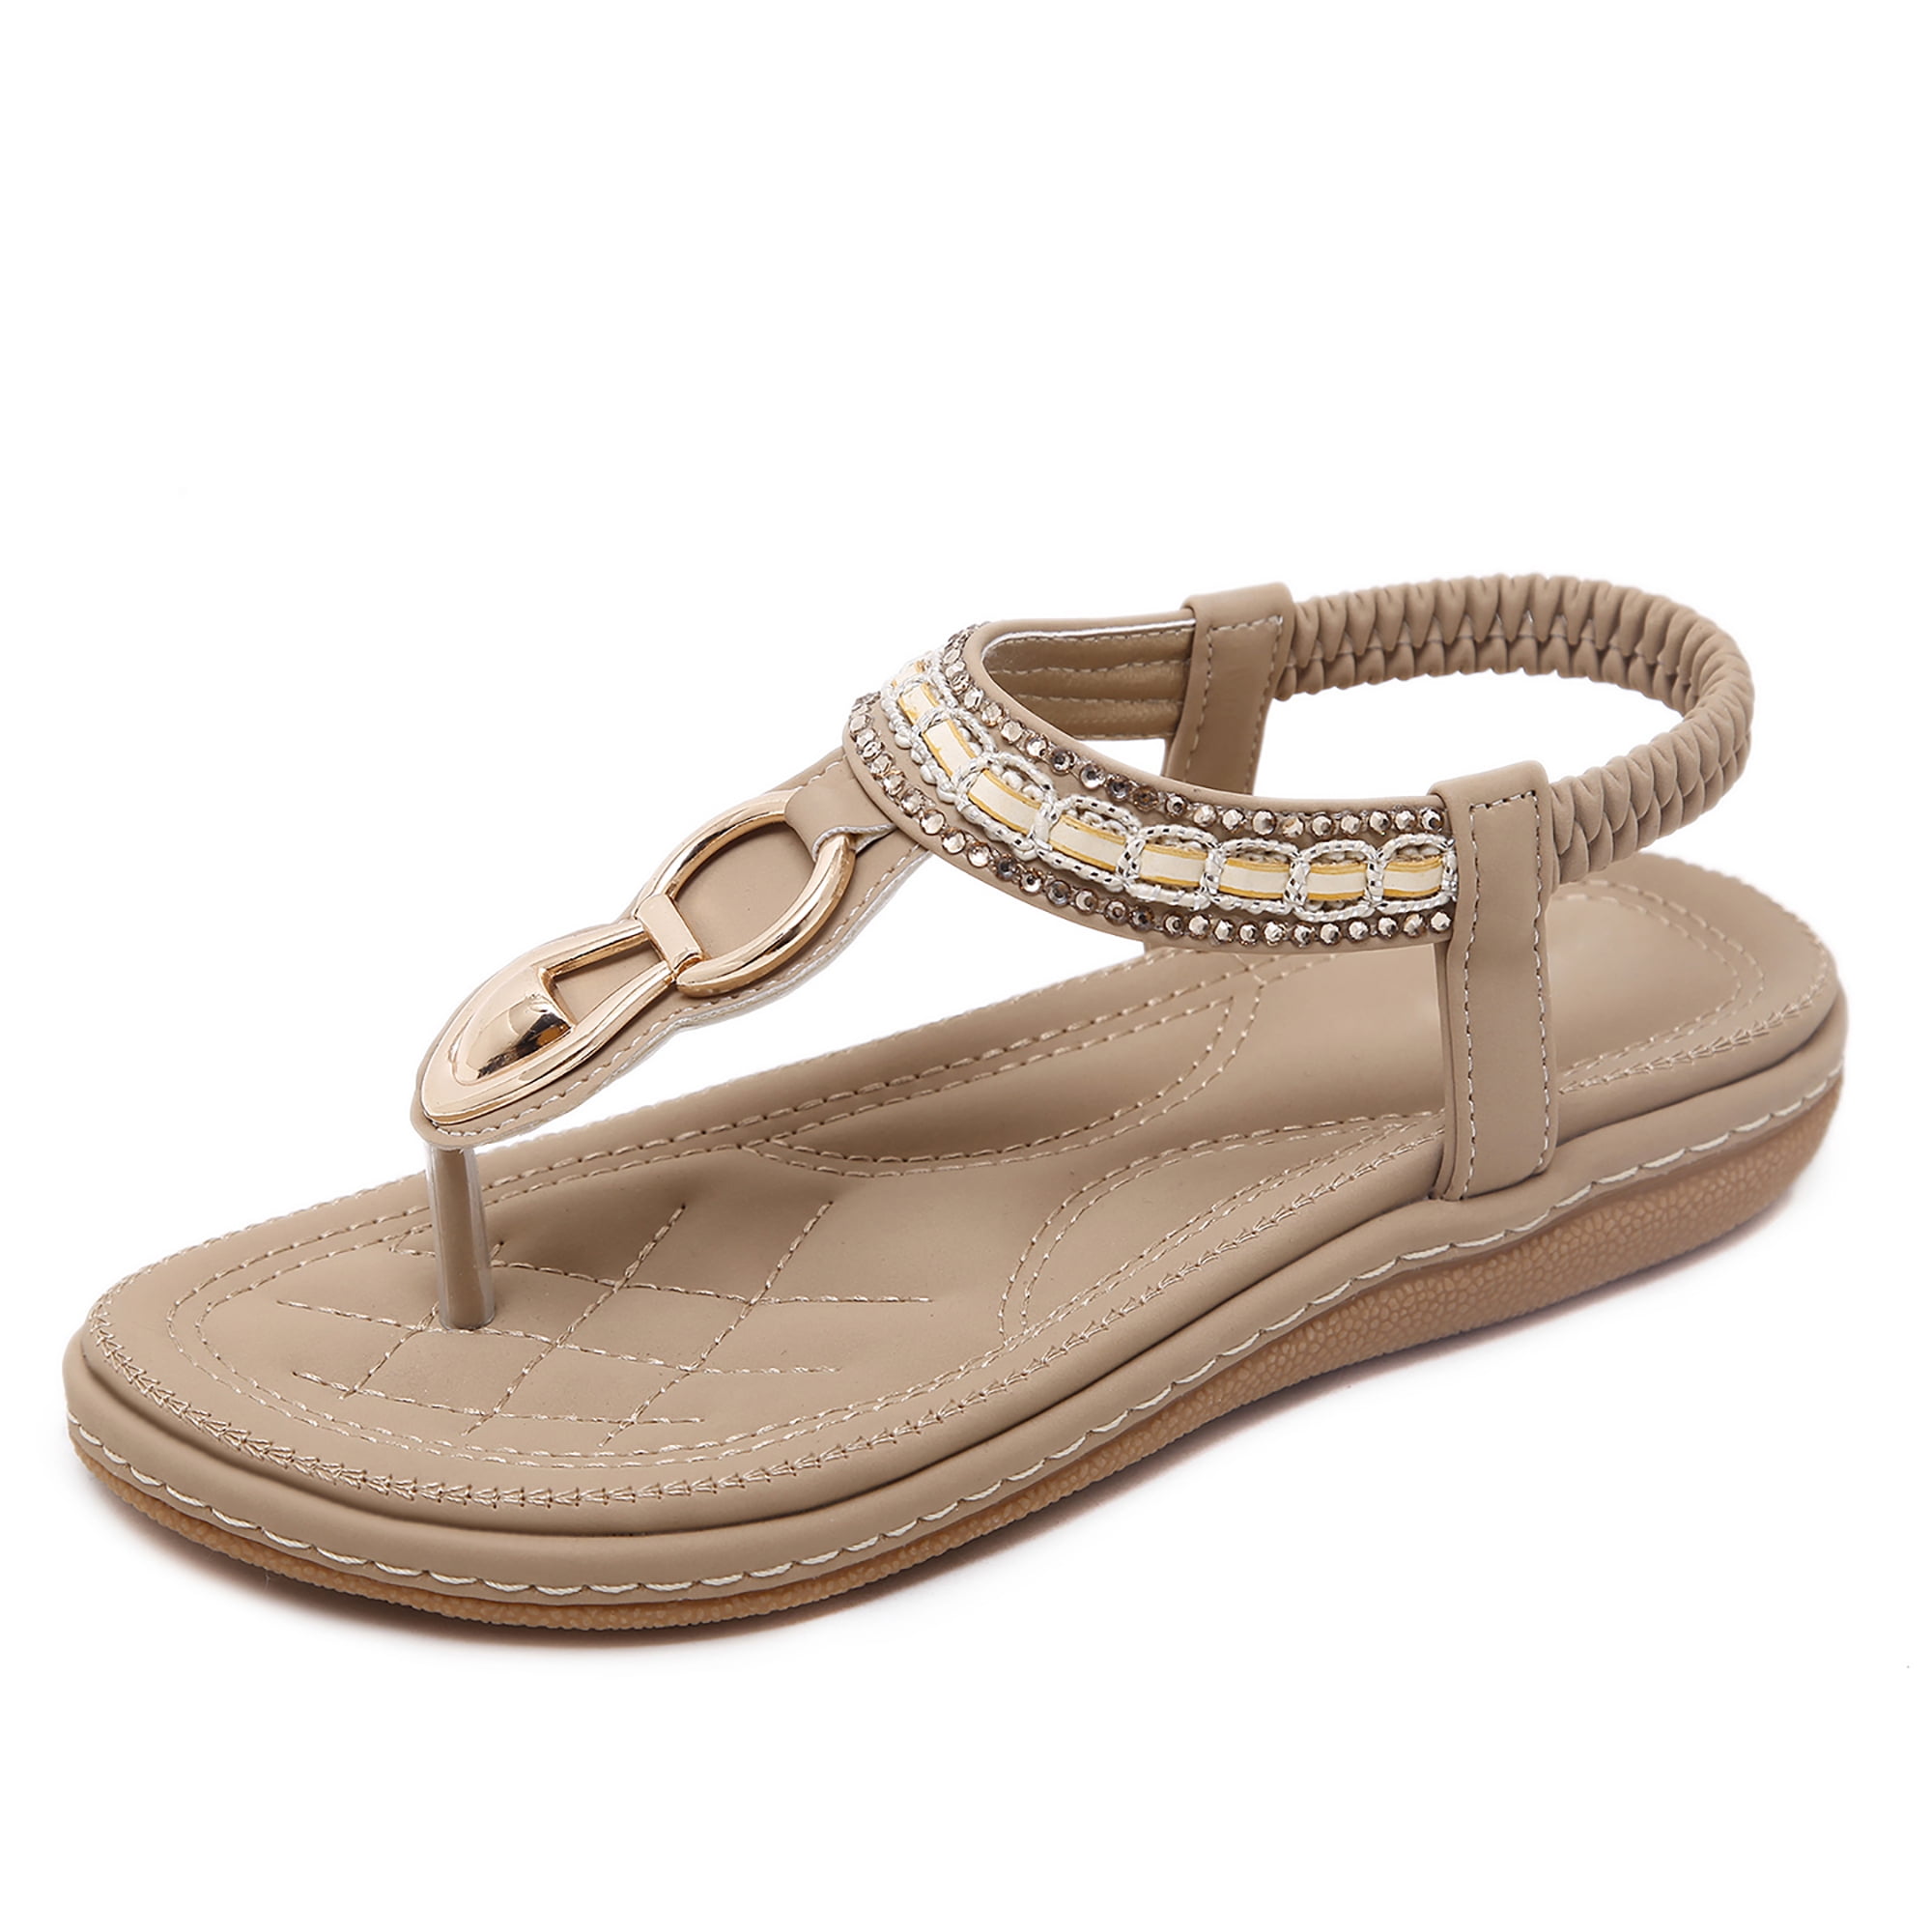 SHIBEVER Rhinestone Flat Sandals for Women Casual Summer Beach Bohemian ...